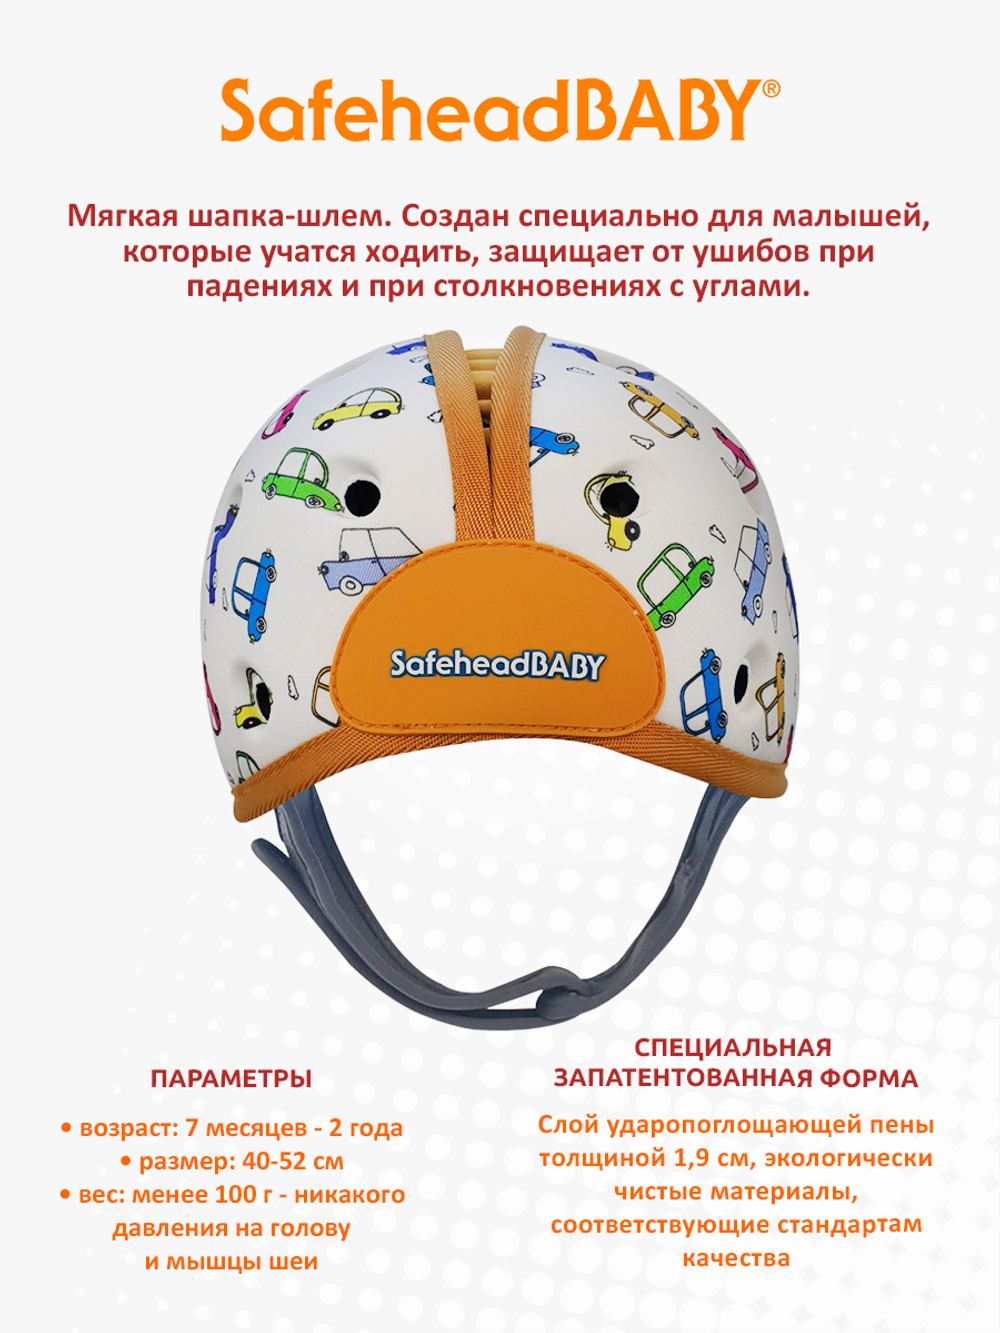 Мягкая шапка-шлем для защиты головы SafeheadBABY. Машинки